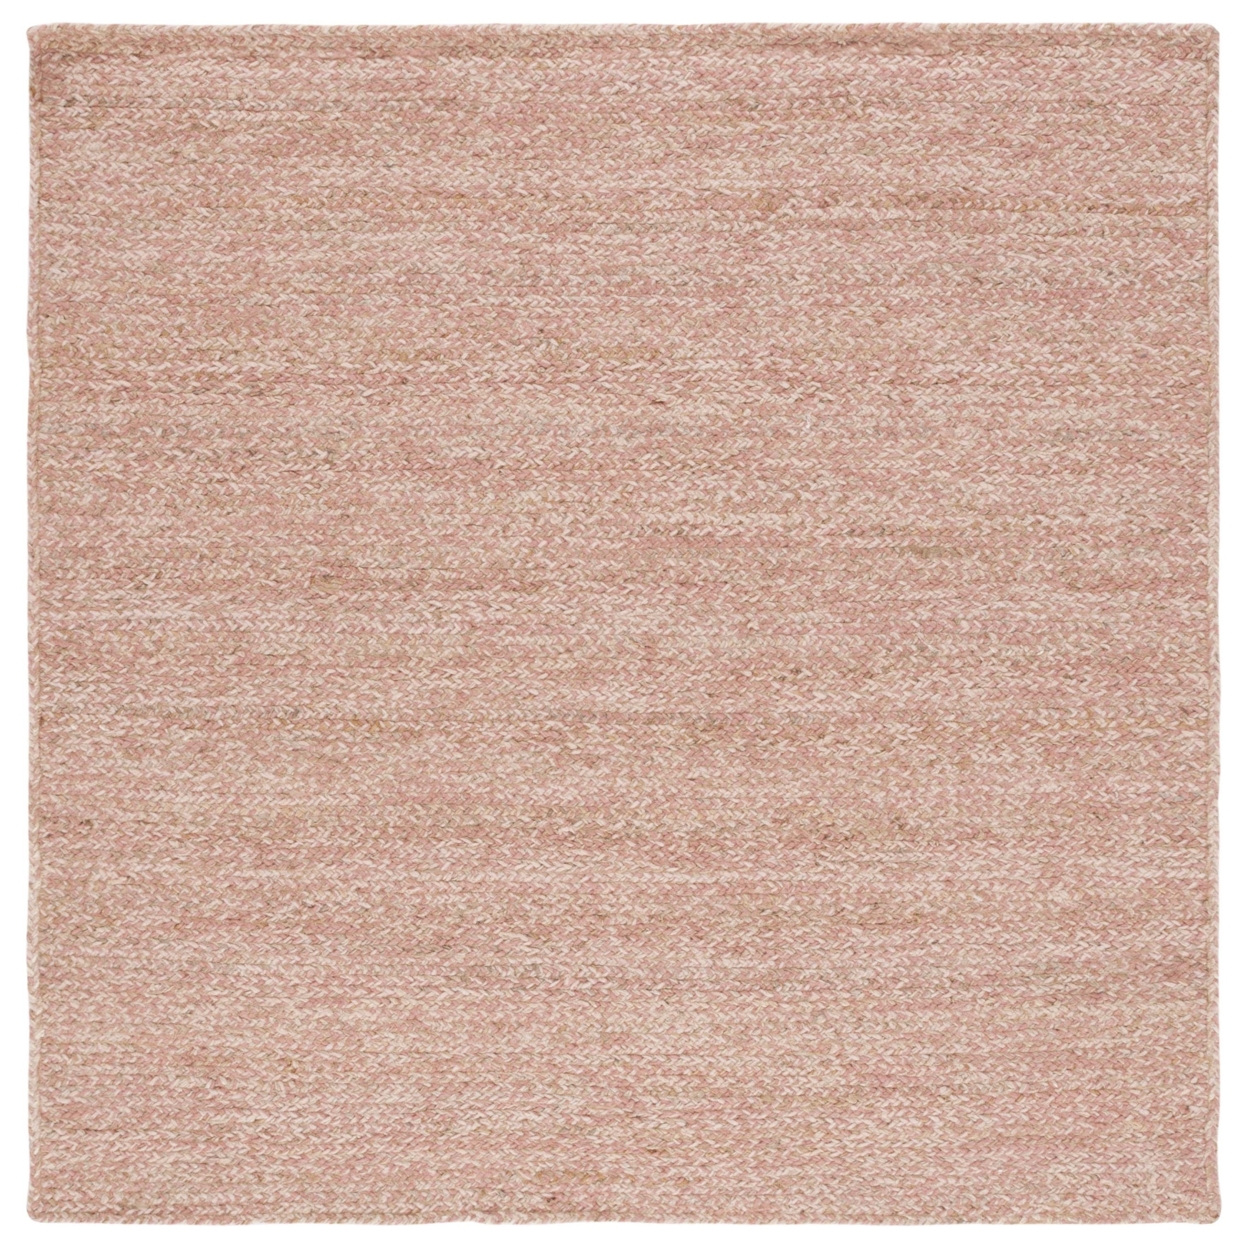 Safavieh NFB950U Natural Fiber Pink / Natural - Blue / Ivory, 6' X 6' Square